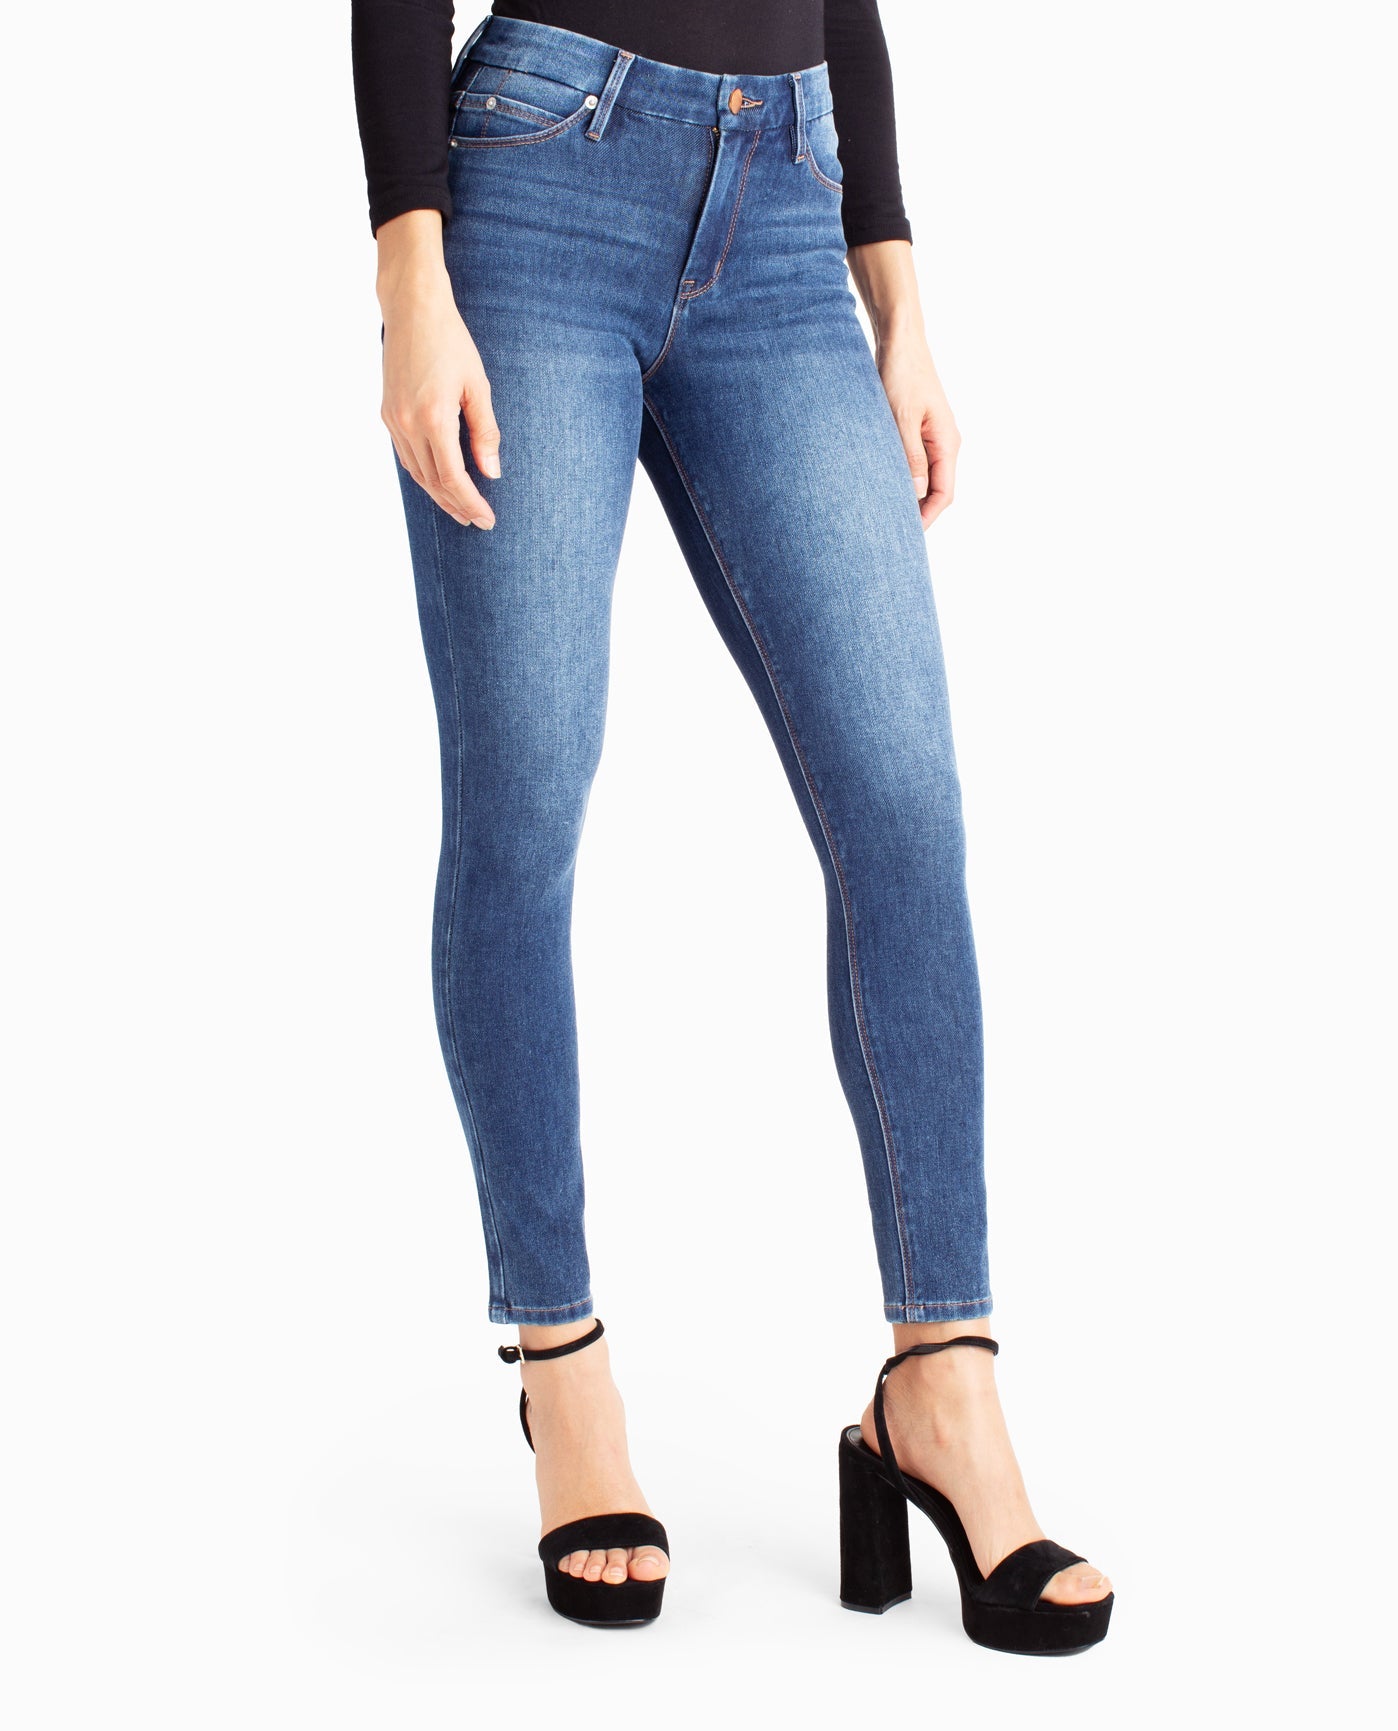 Women\'s Nicole Miller Designer Redhook High Rise Skinny Jean